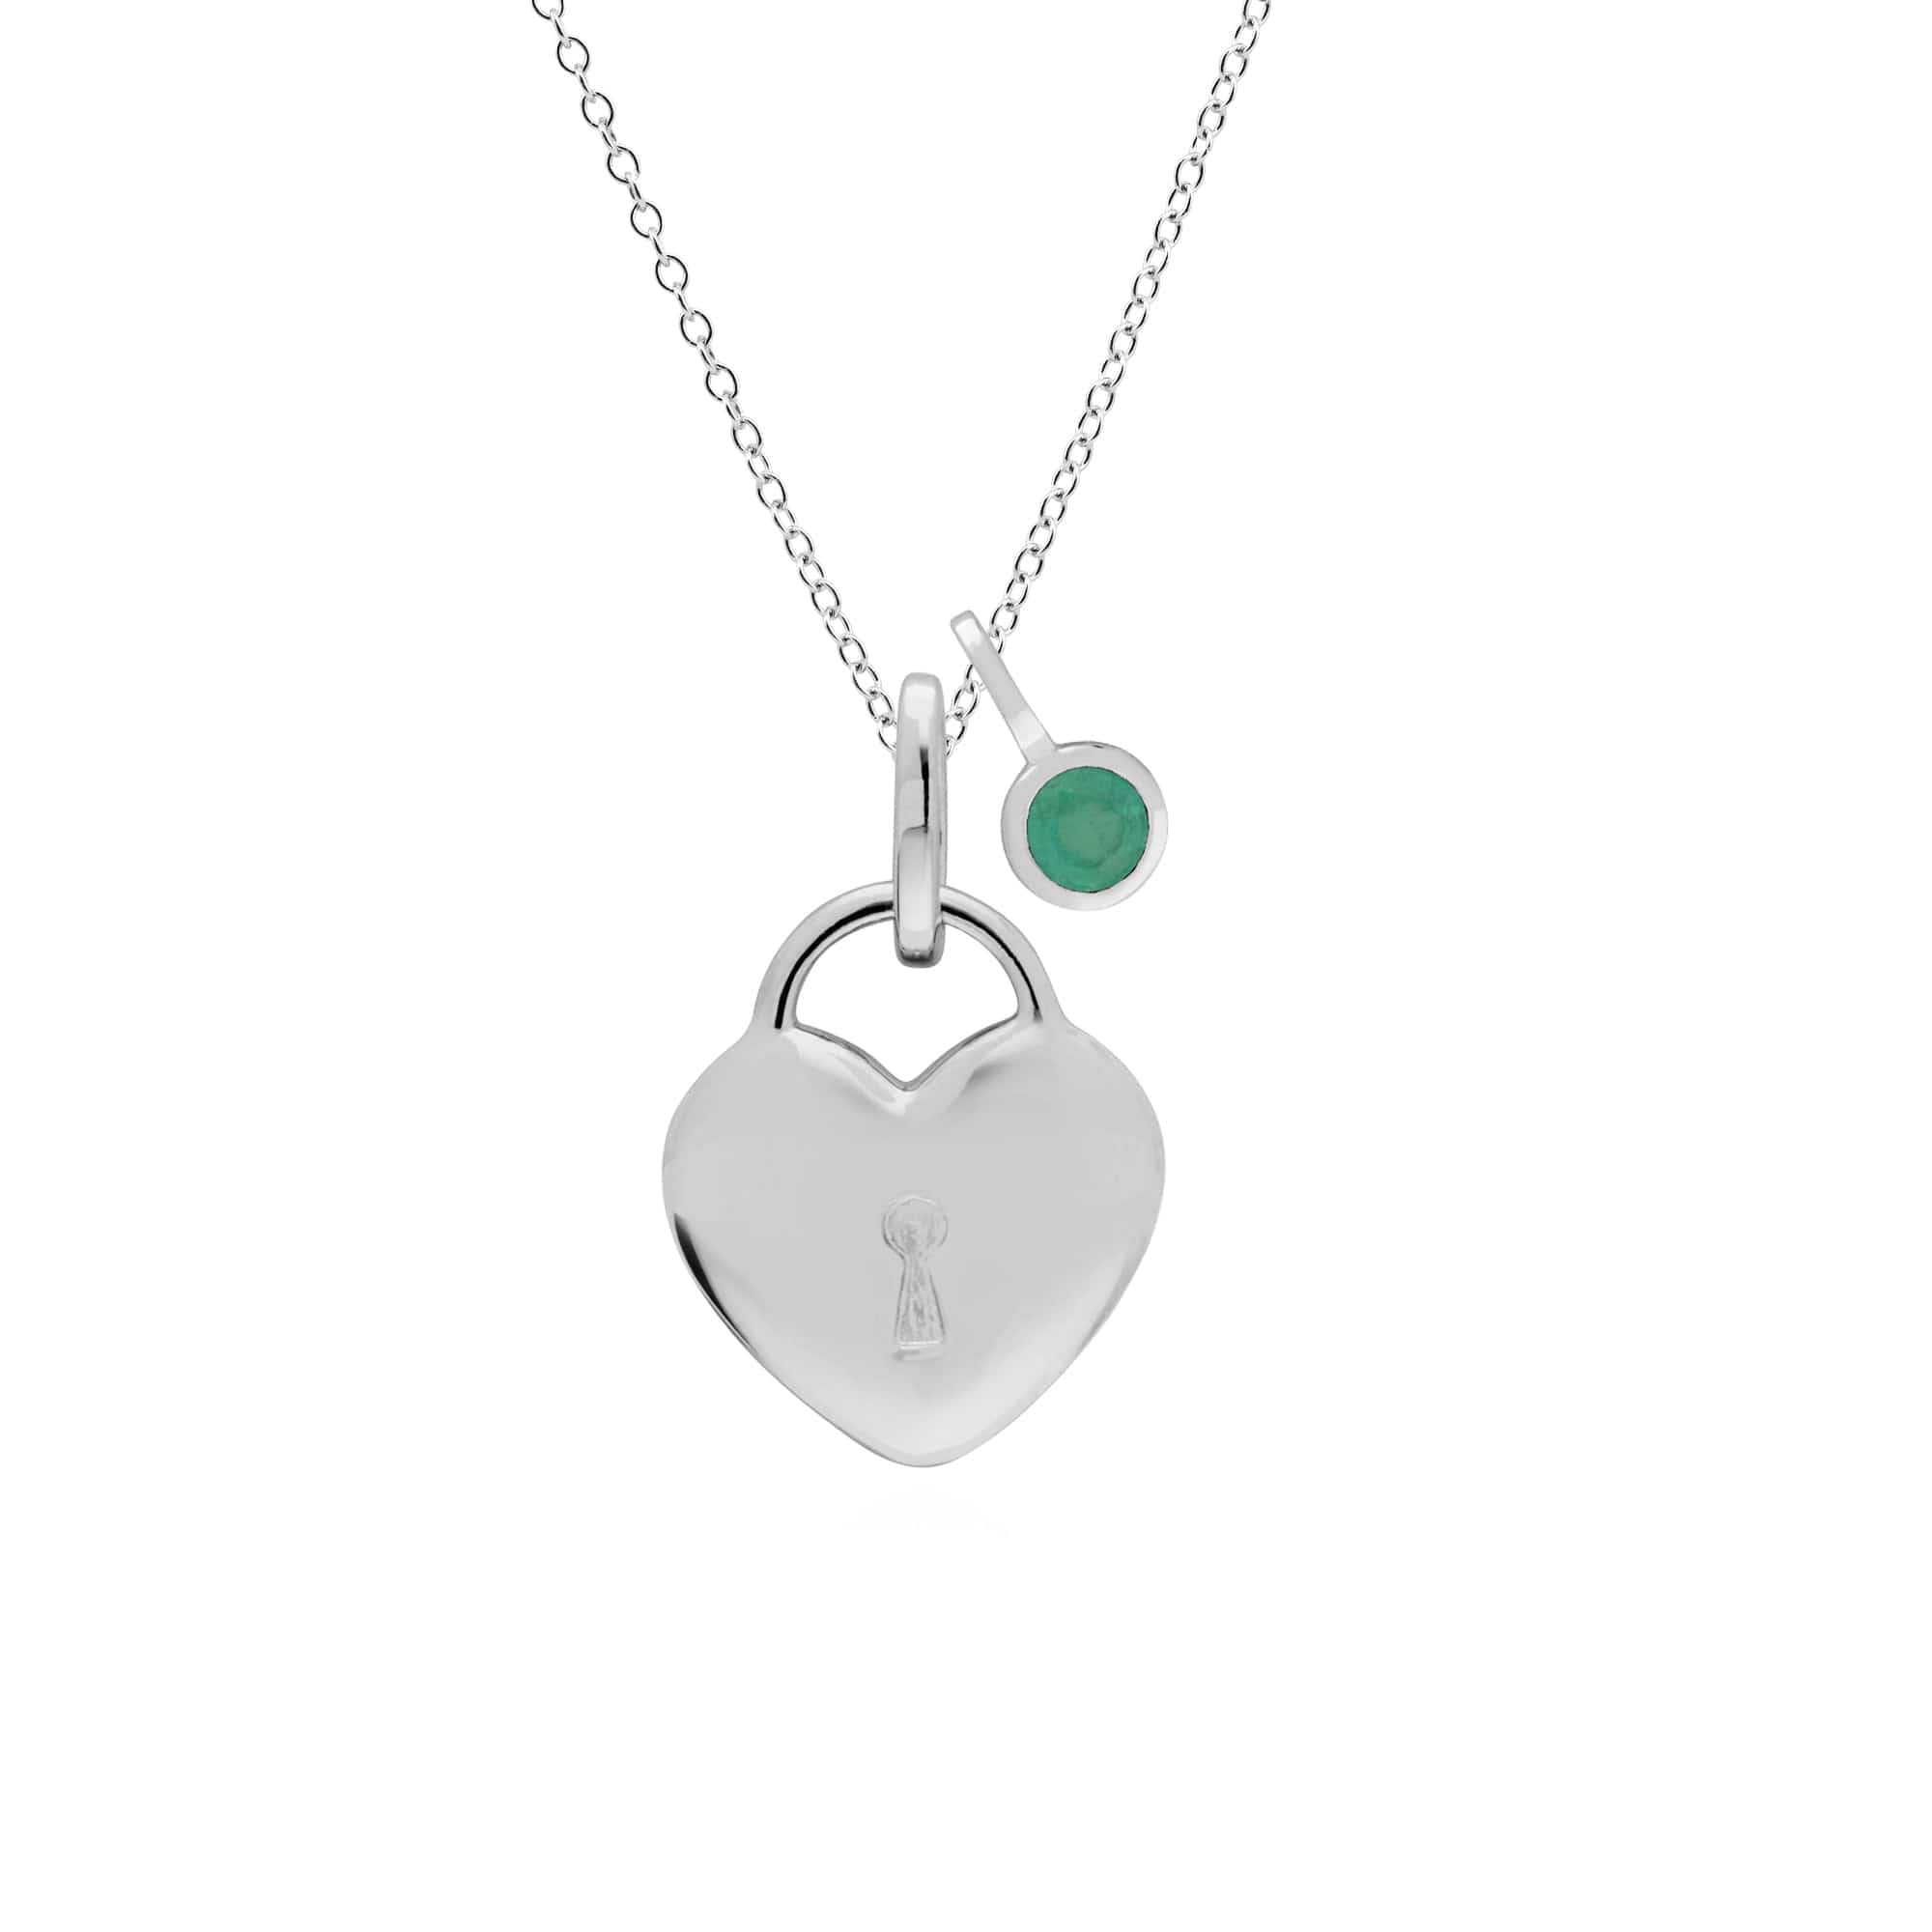 270P027602925-270P027001925 Classic Heart Lock Pendant & Emerald Charm in 925 Sterling Silver 1